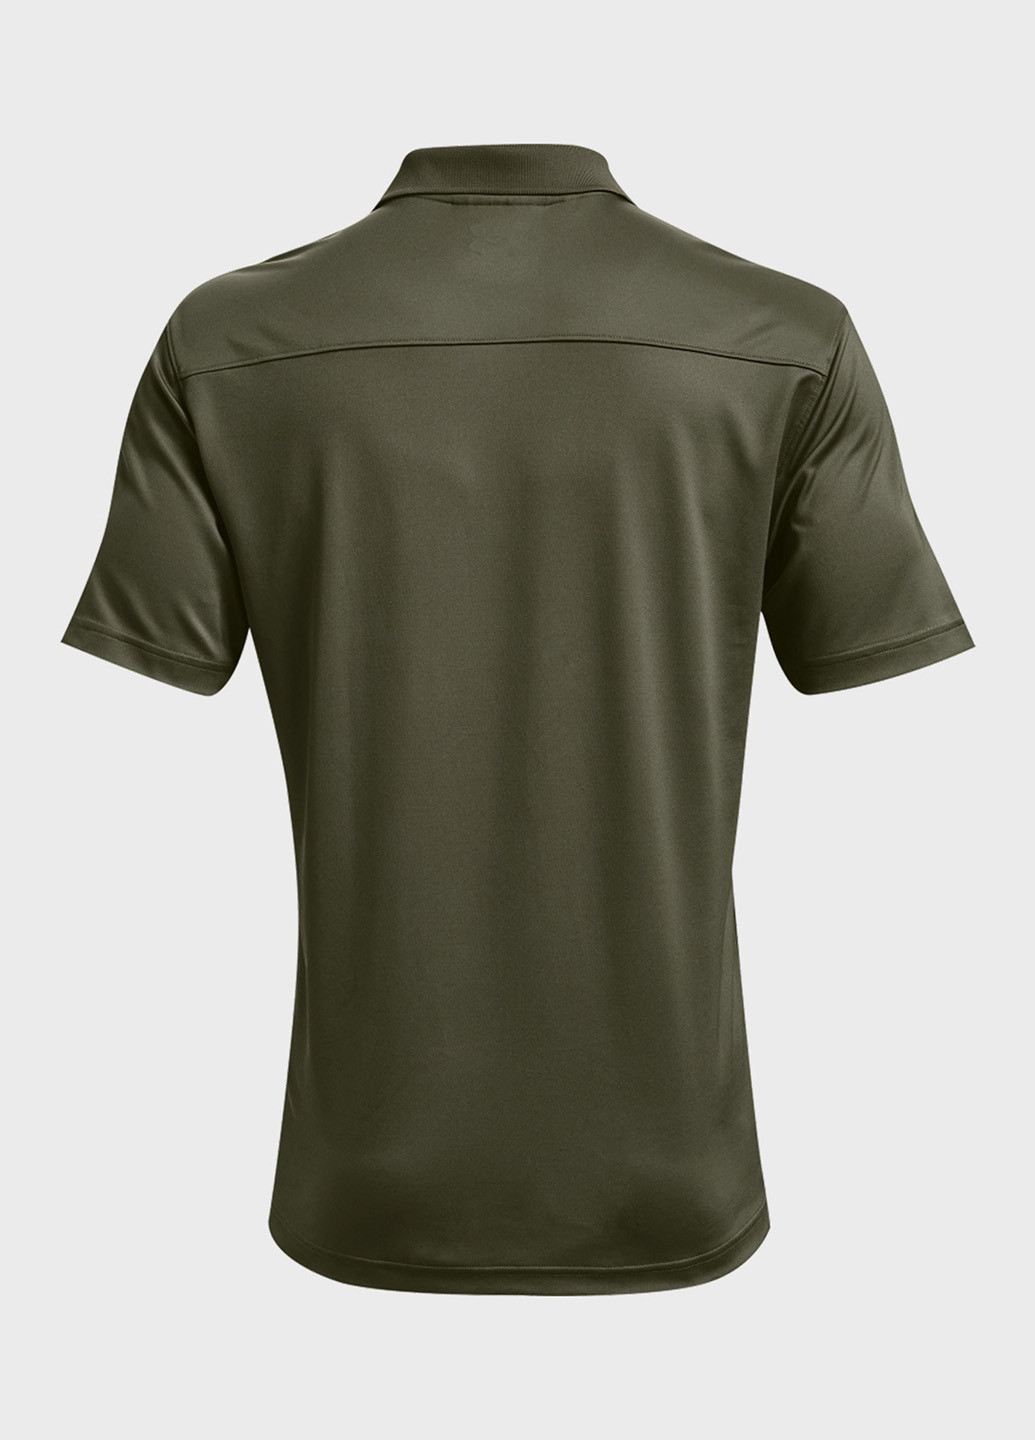 Оливковая футболка-футболка для мужчин Under Armour однотонная